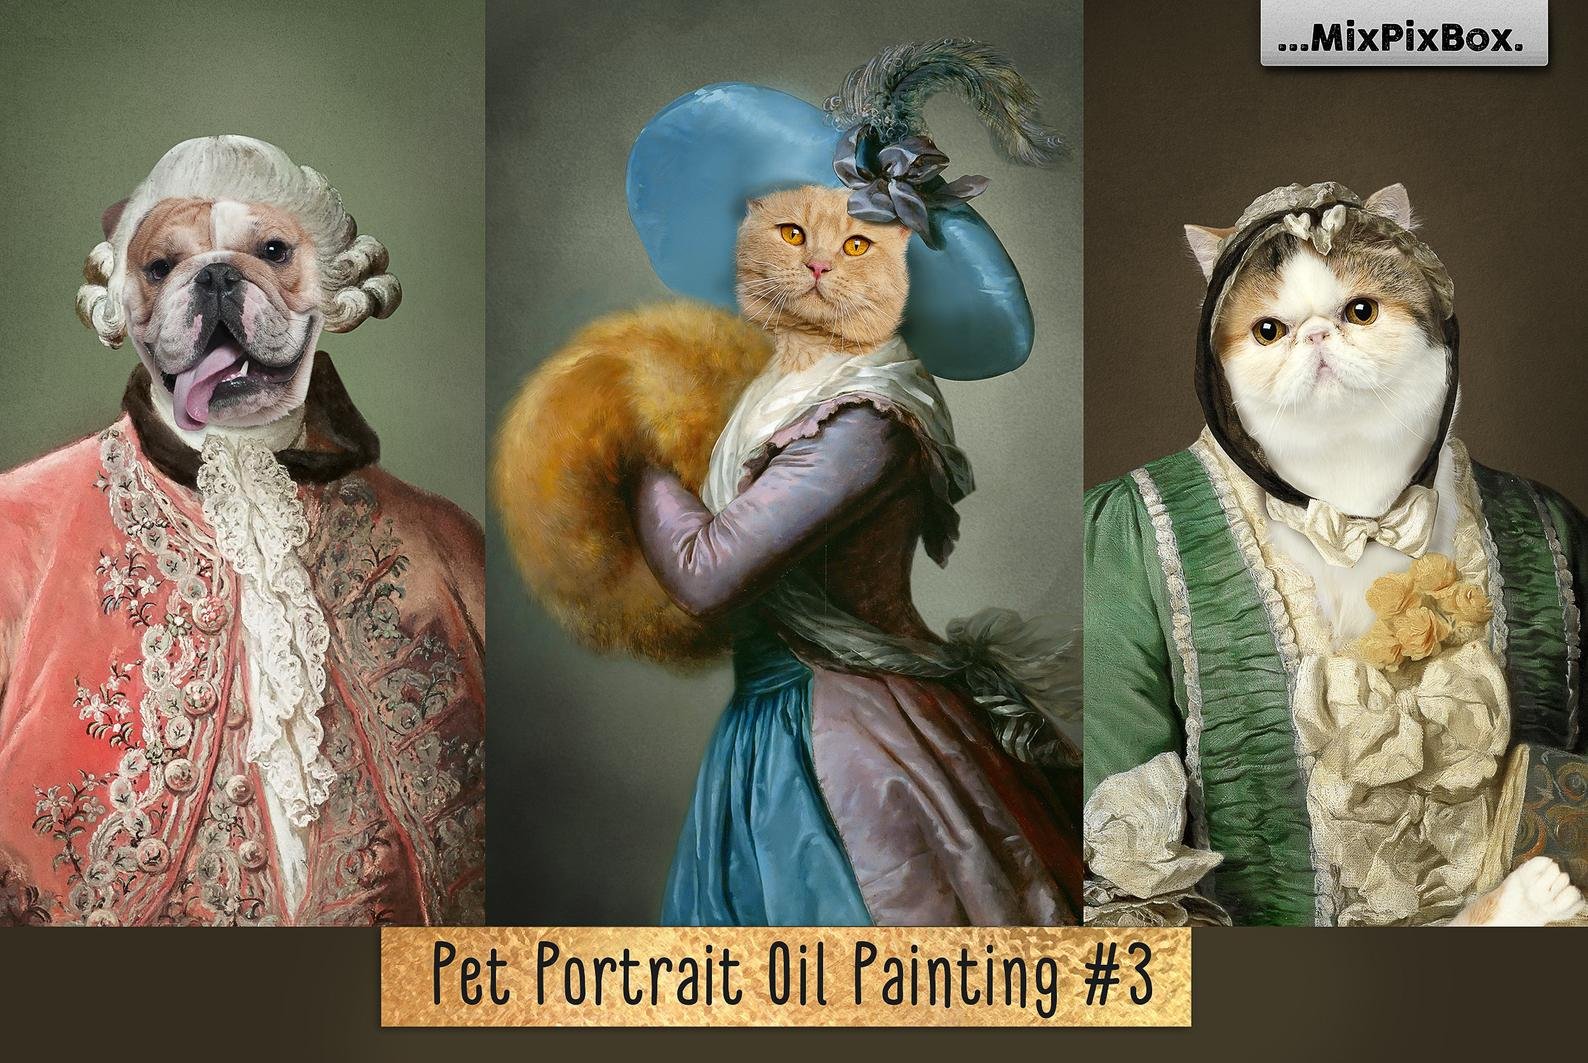 Pet Portrait Oil Background v.3cover image.